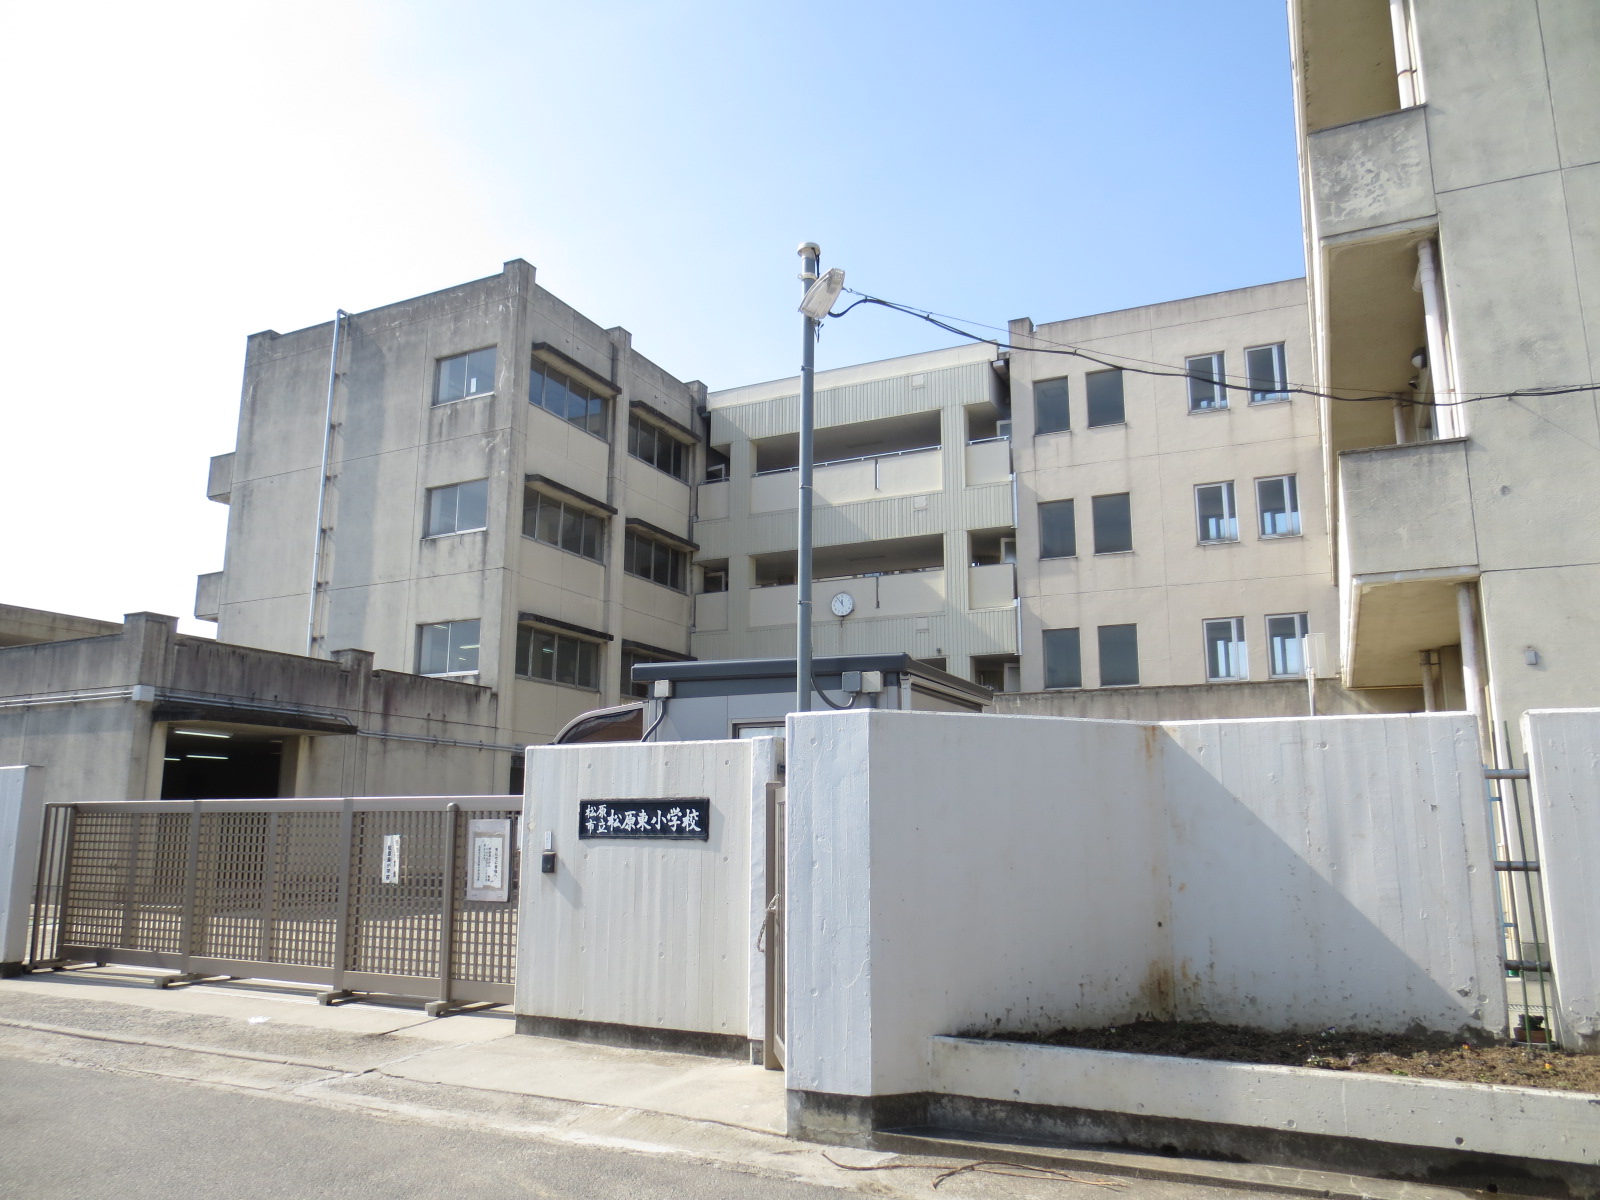 Primary school. Matsubara Municipal Matsubarahigashi to elementary school (elementary school) 541m